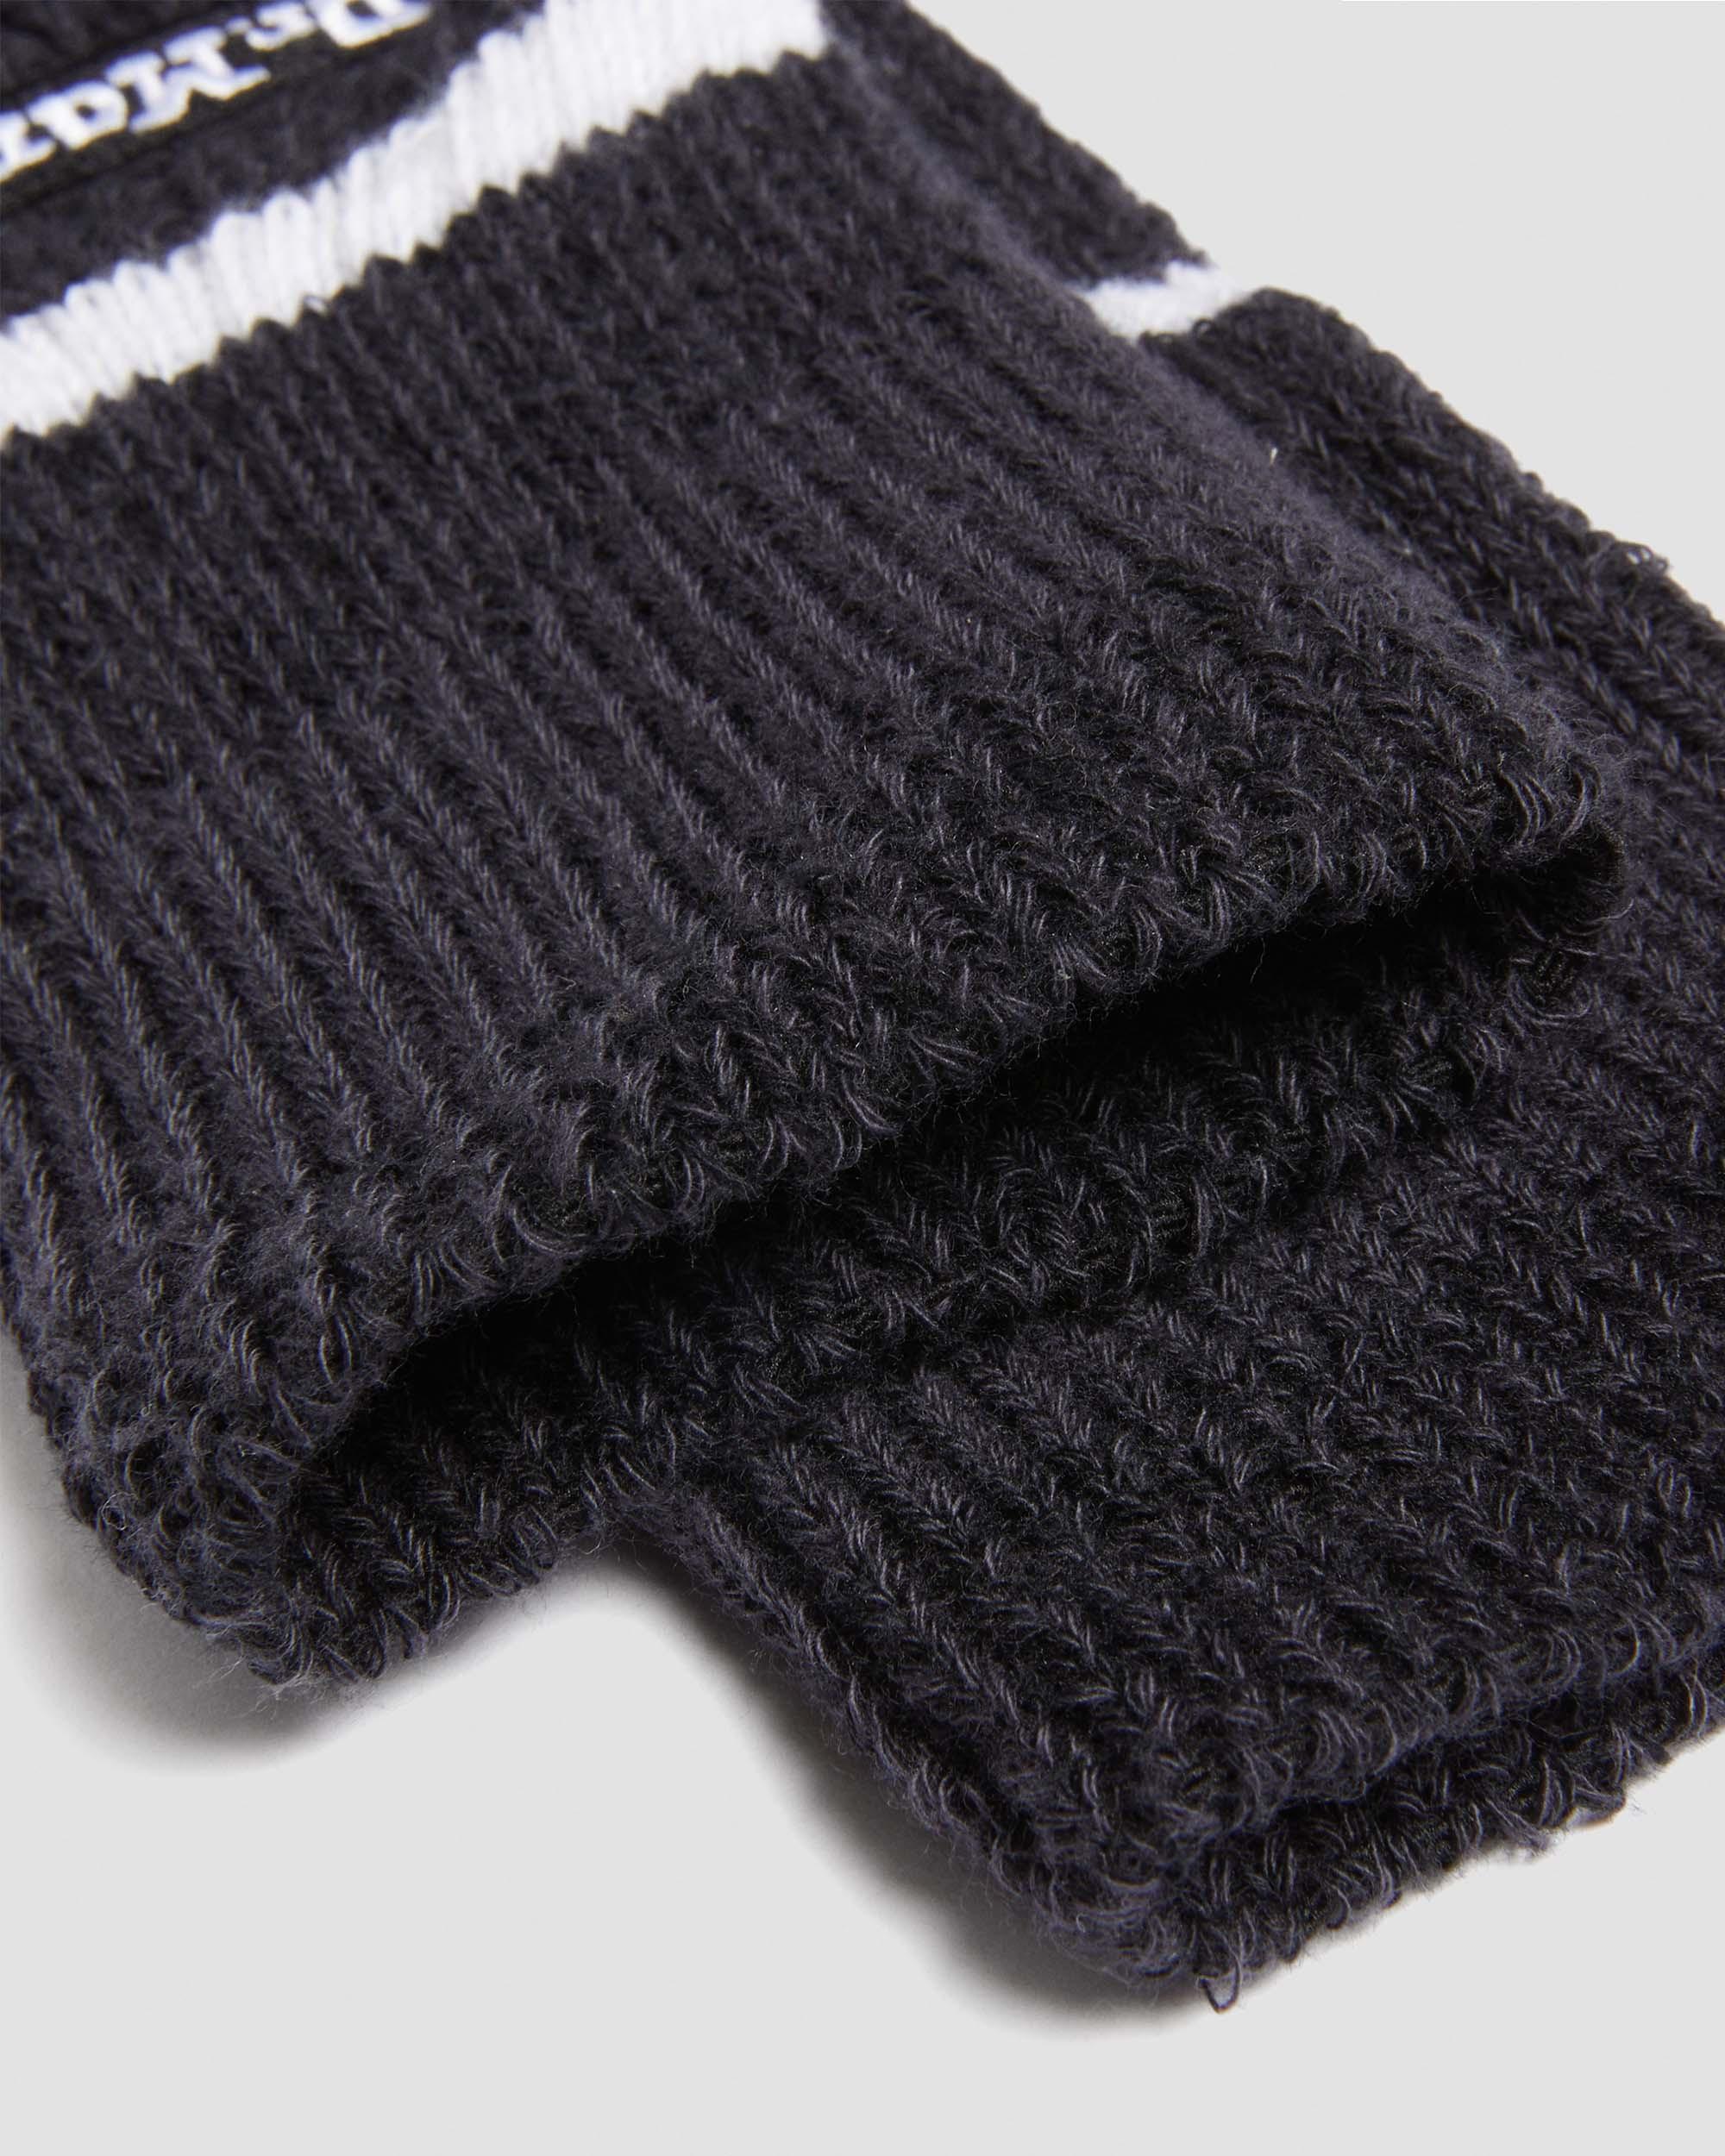 Marl Long Organic Cotton Blend Socks in Black